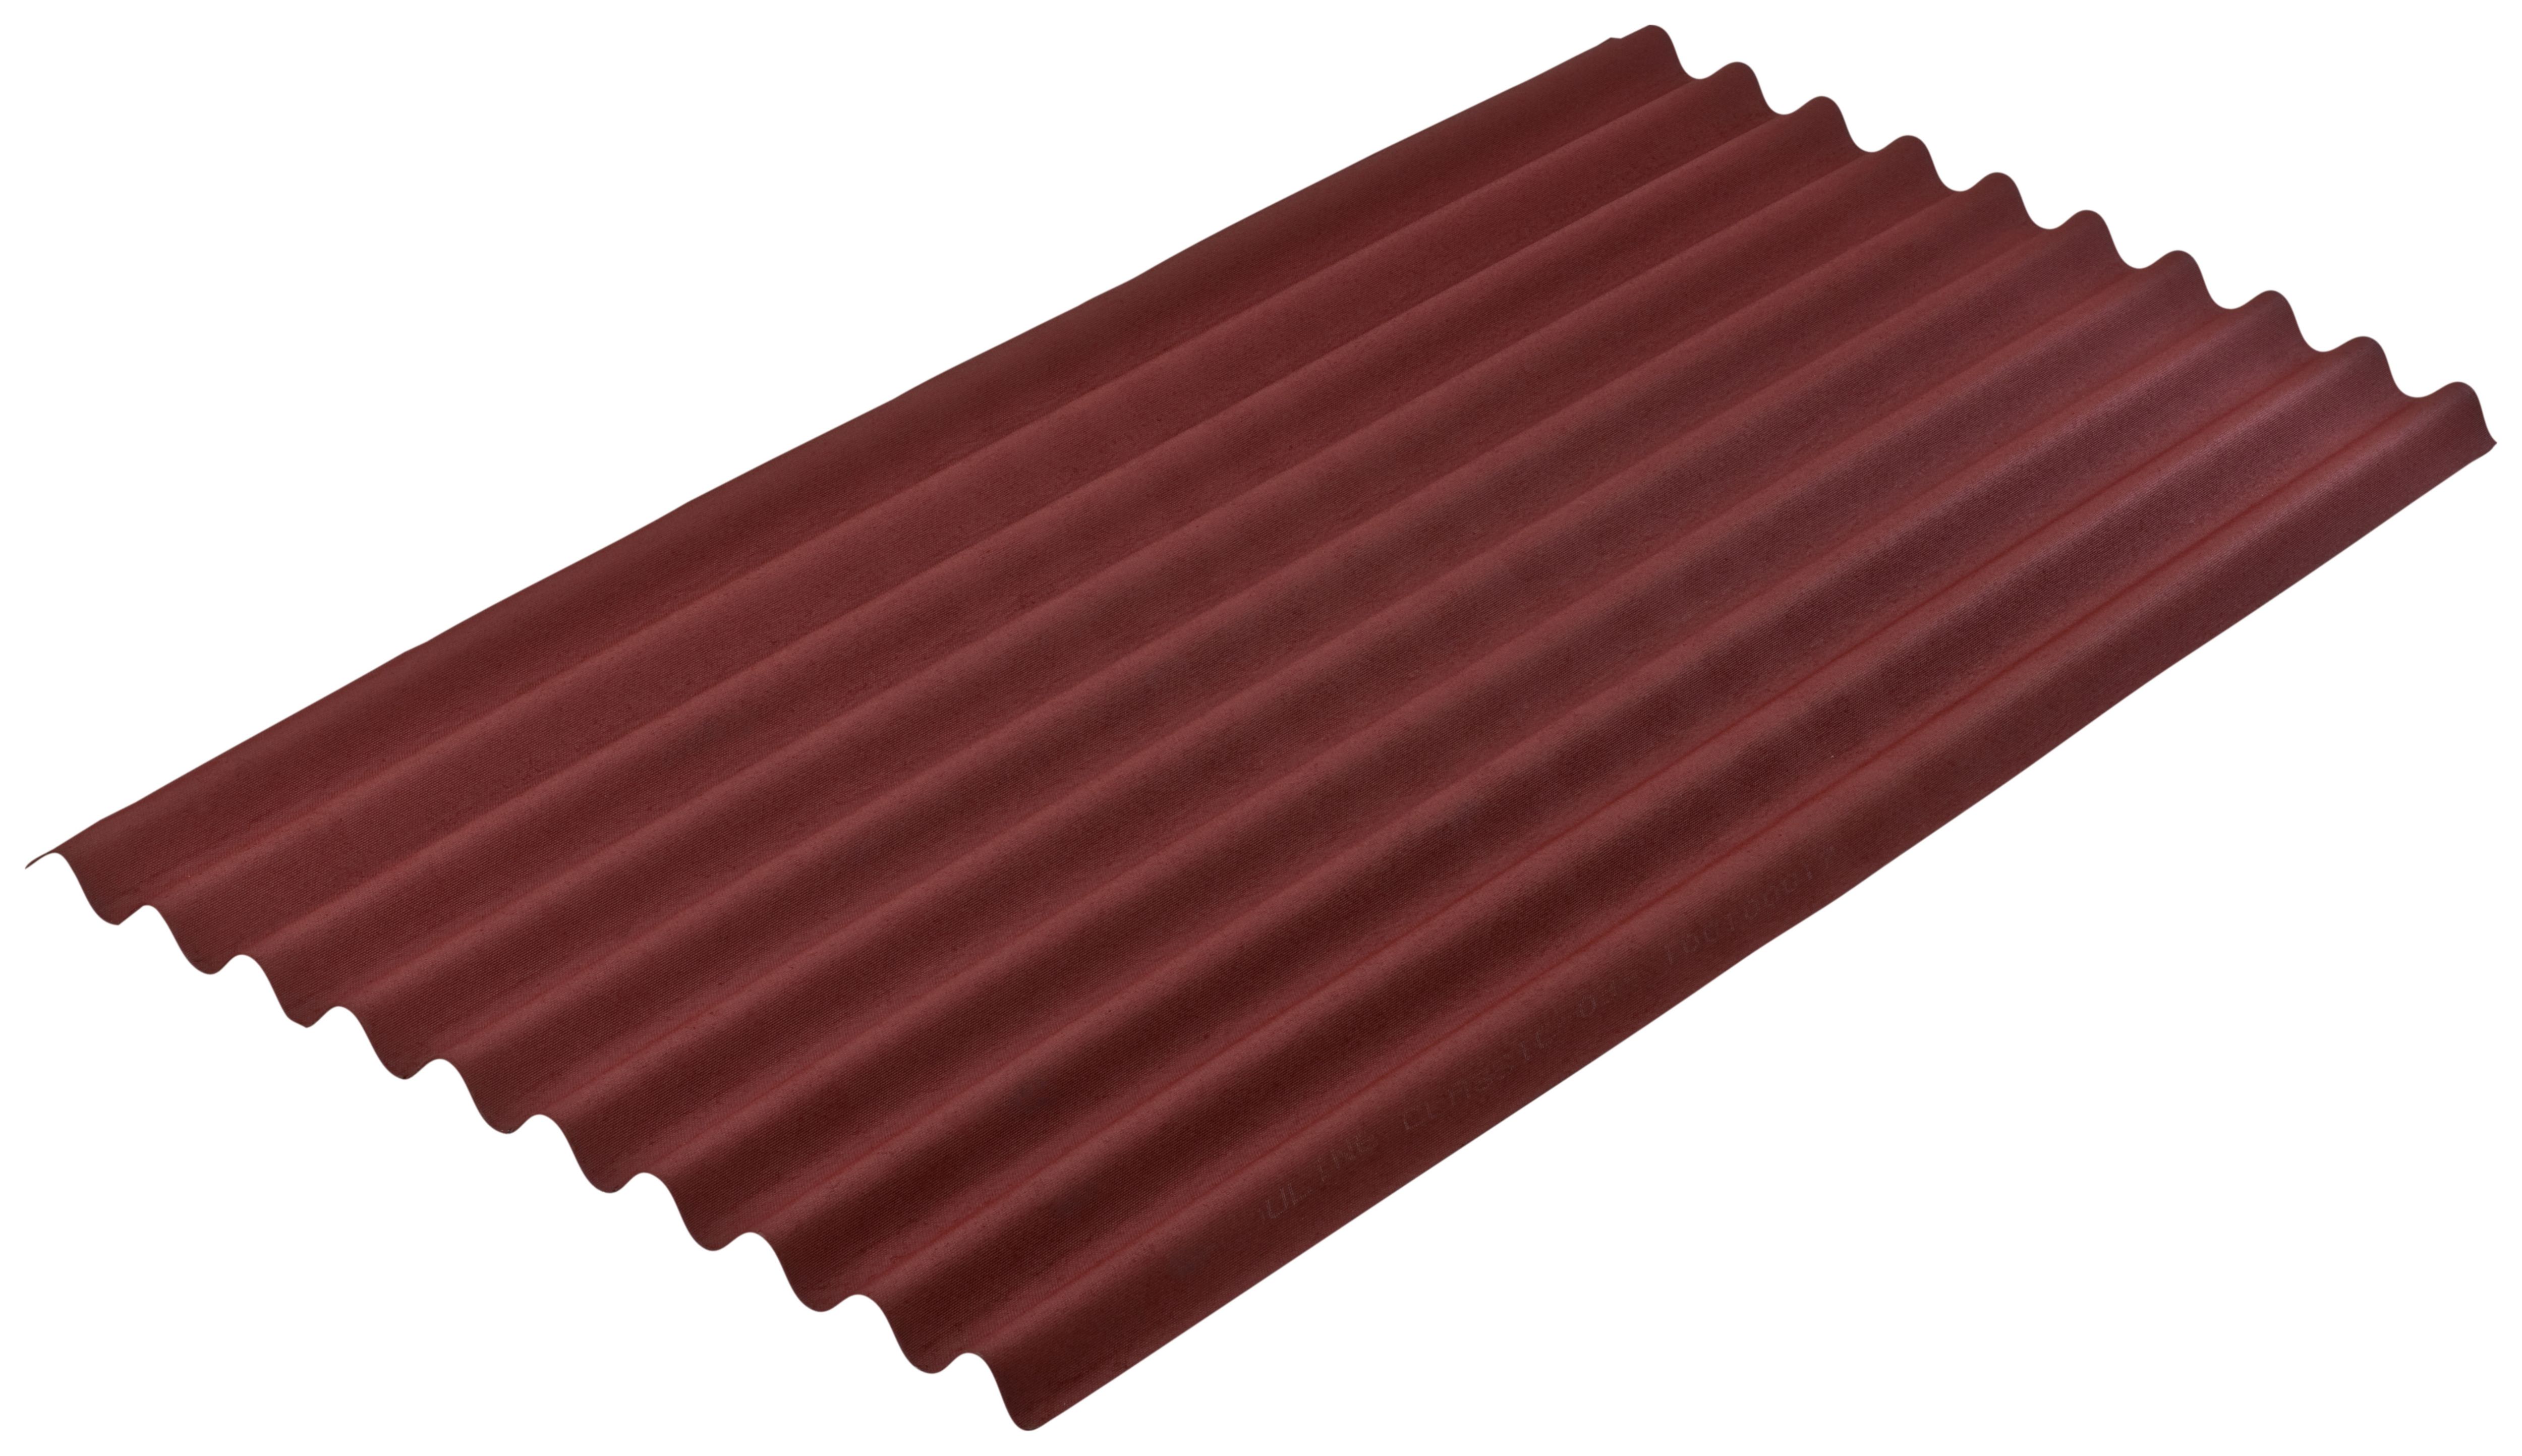 Image of Onduline Red Bitumen Corrugated Roof Sheet - 950mm x 2000mm x 3mm